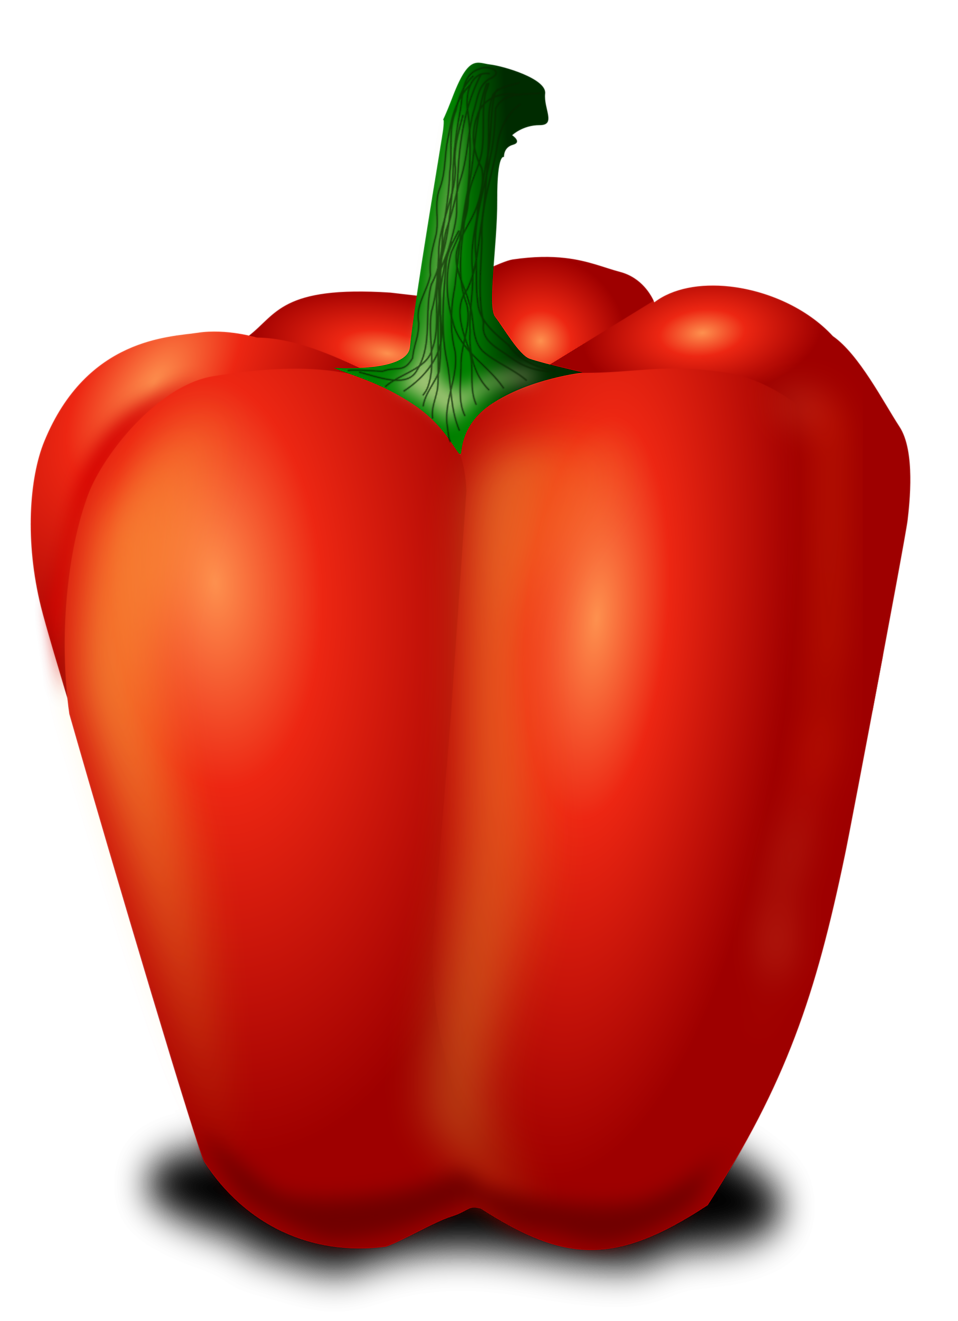 Free stock photo illustration. Vegetables clipart bell pepper